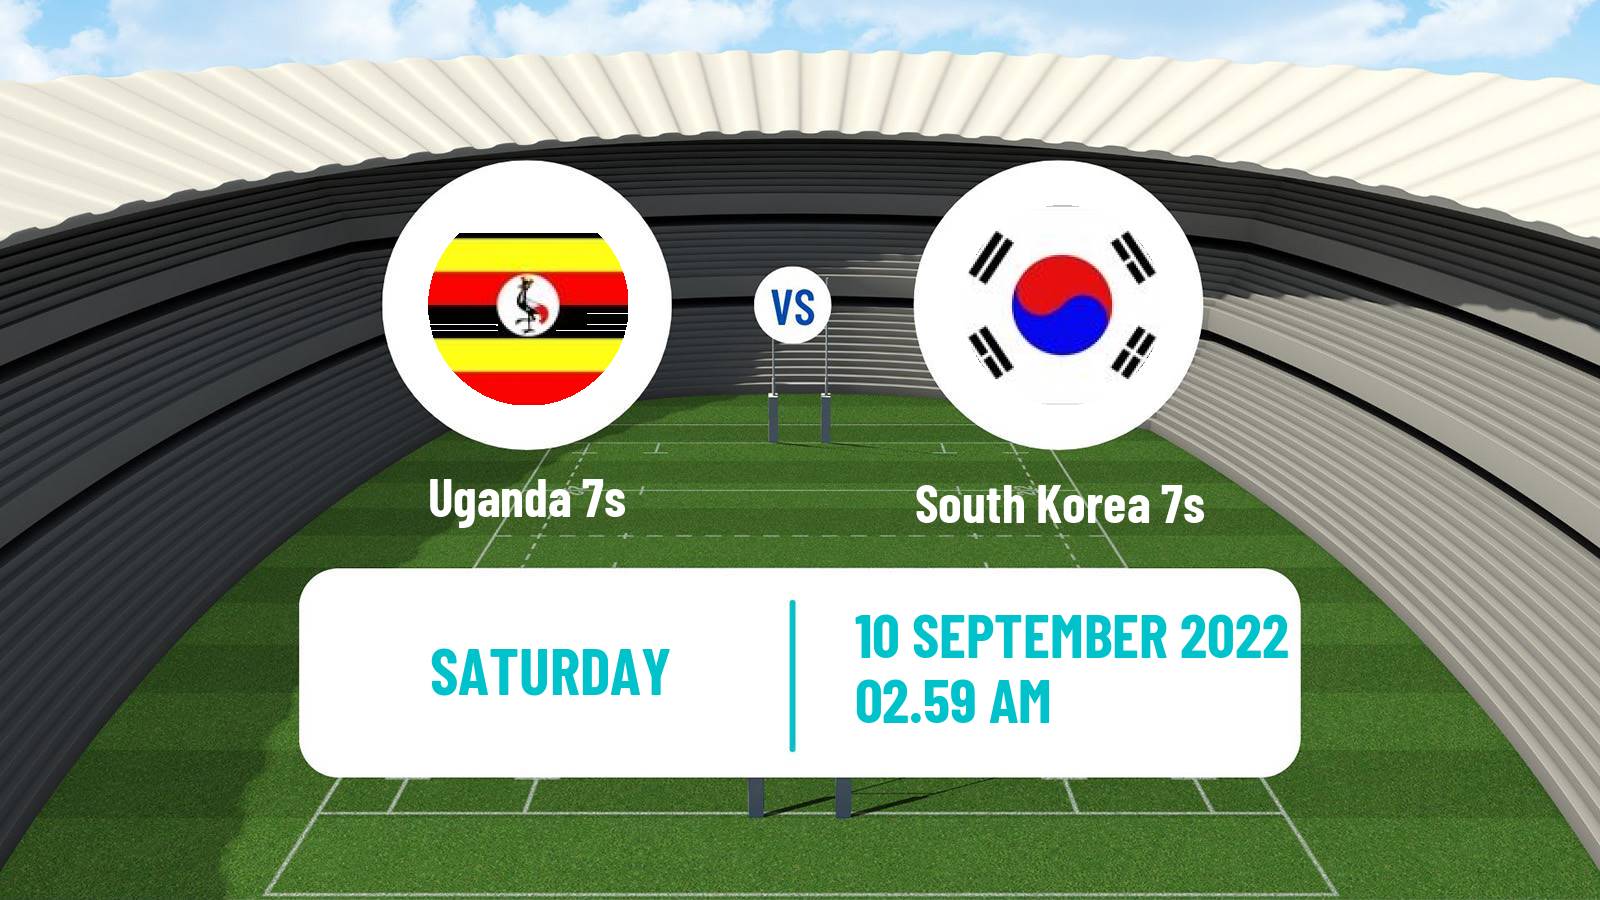 Rugby union Sevens World Cup Uganda 7s - South Korea 7s